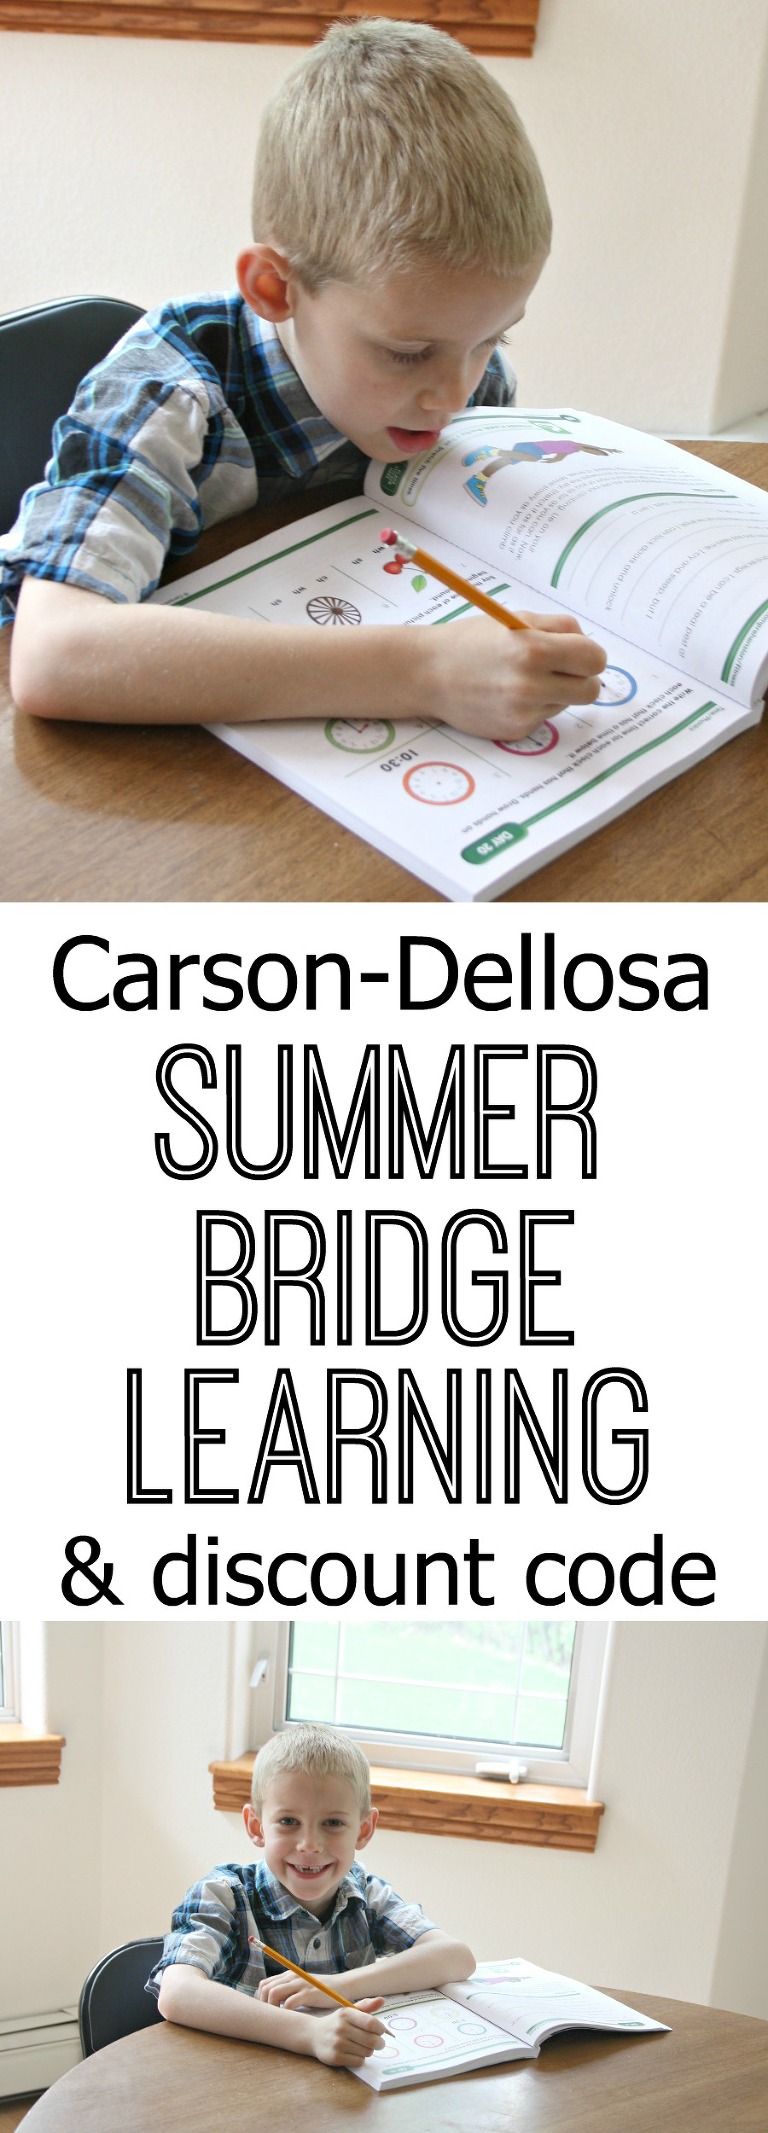 Carson-dellosa summer bridge learning workbooks